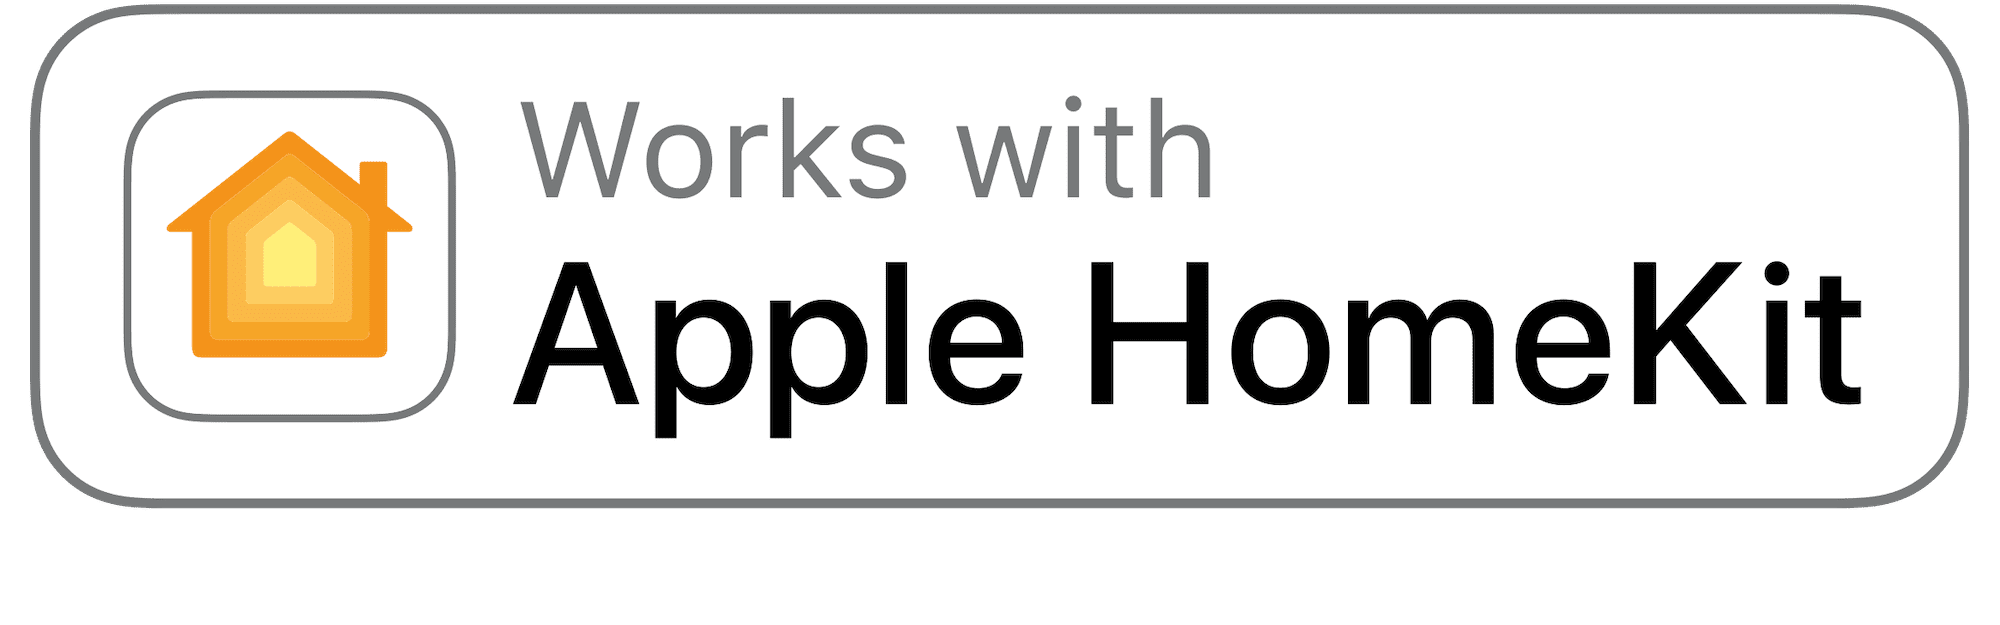 Works with Apple HomeKit Badge